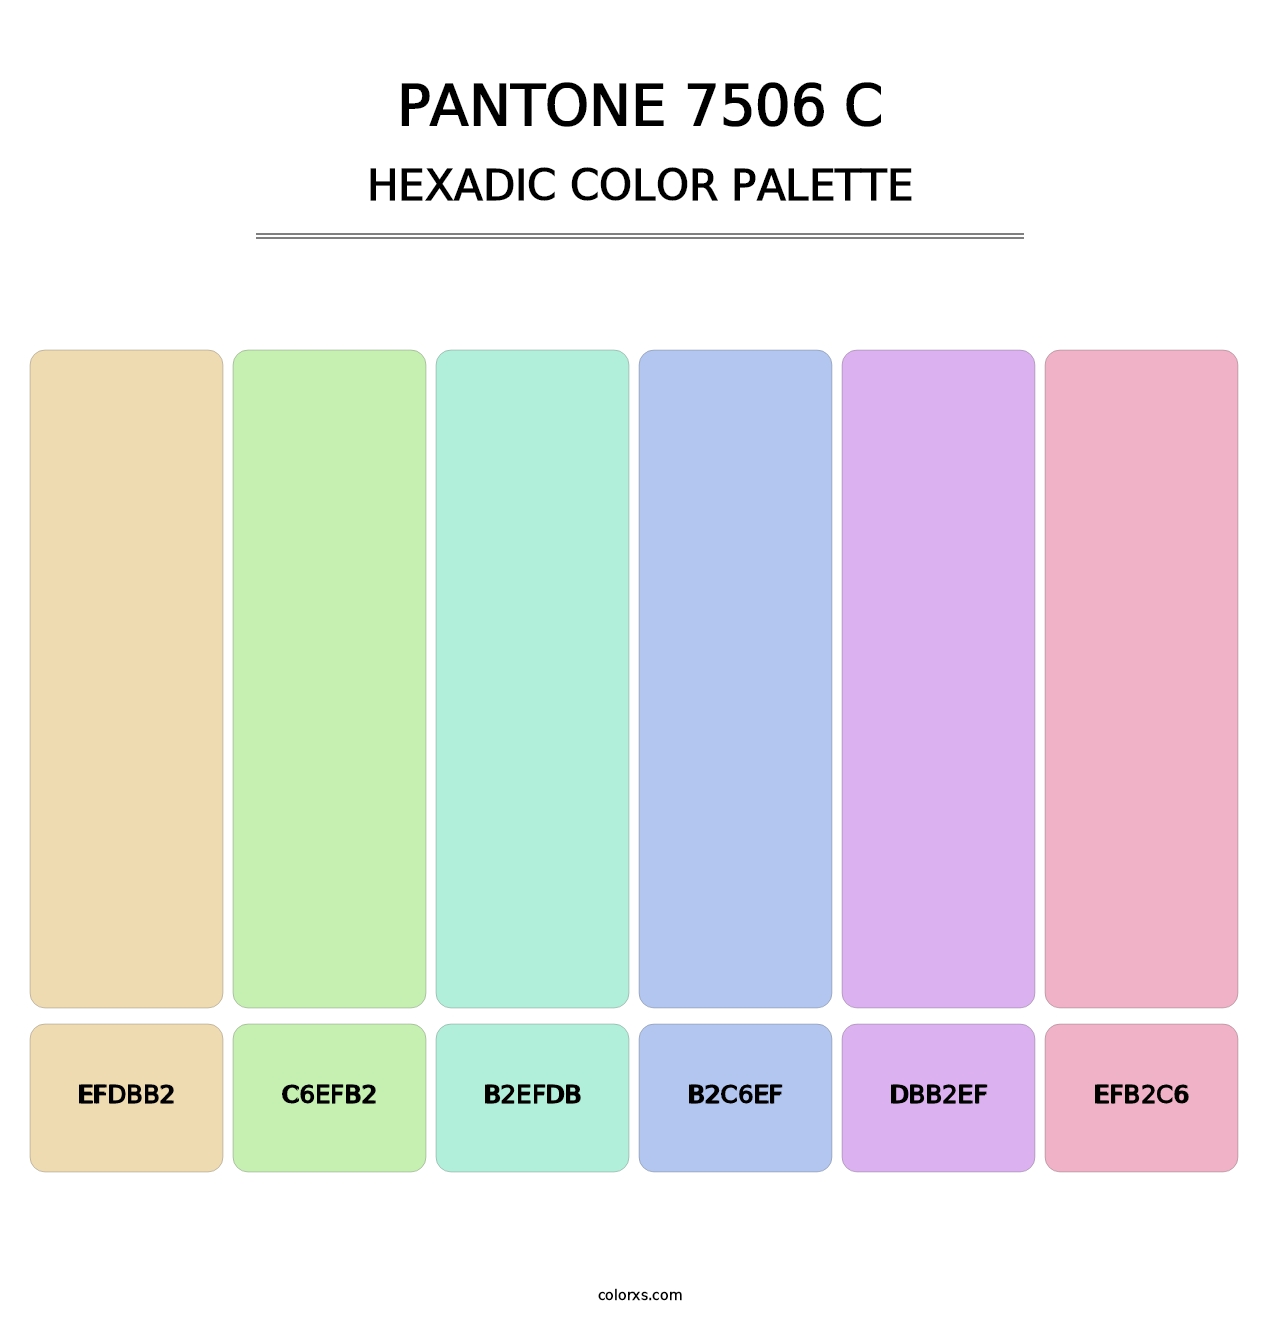 PANTONE 7506 C - Hexadic Color Palette